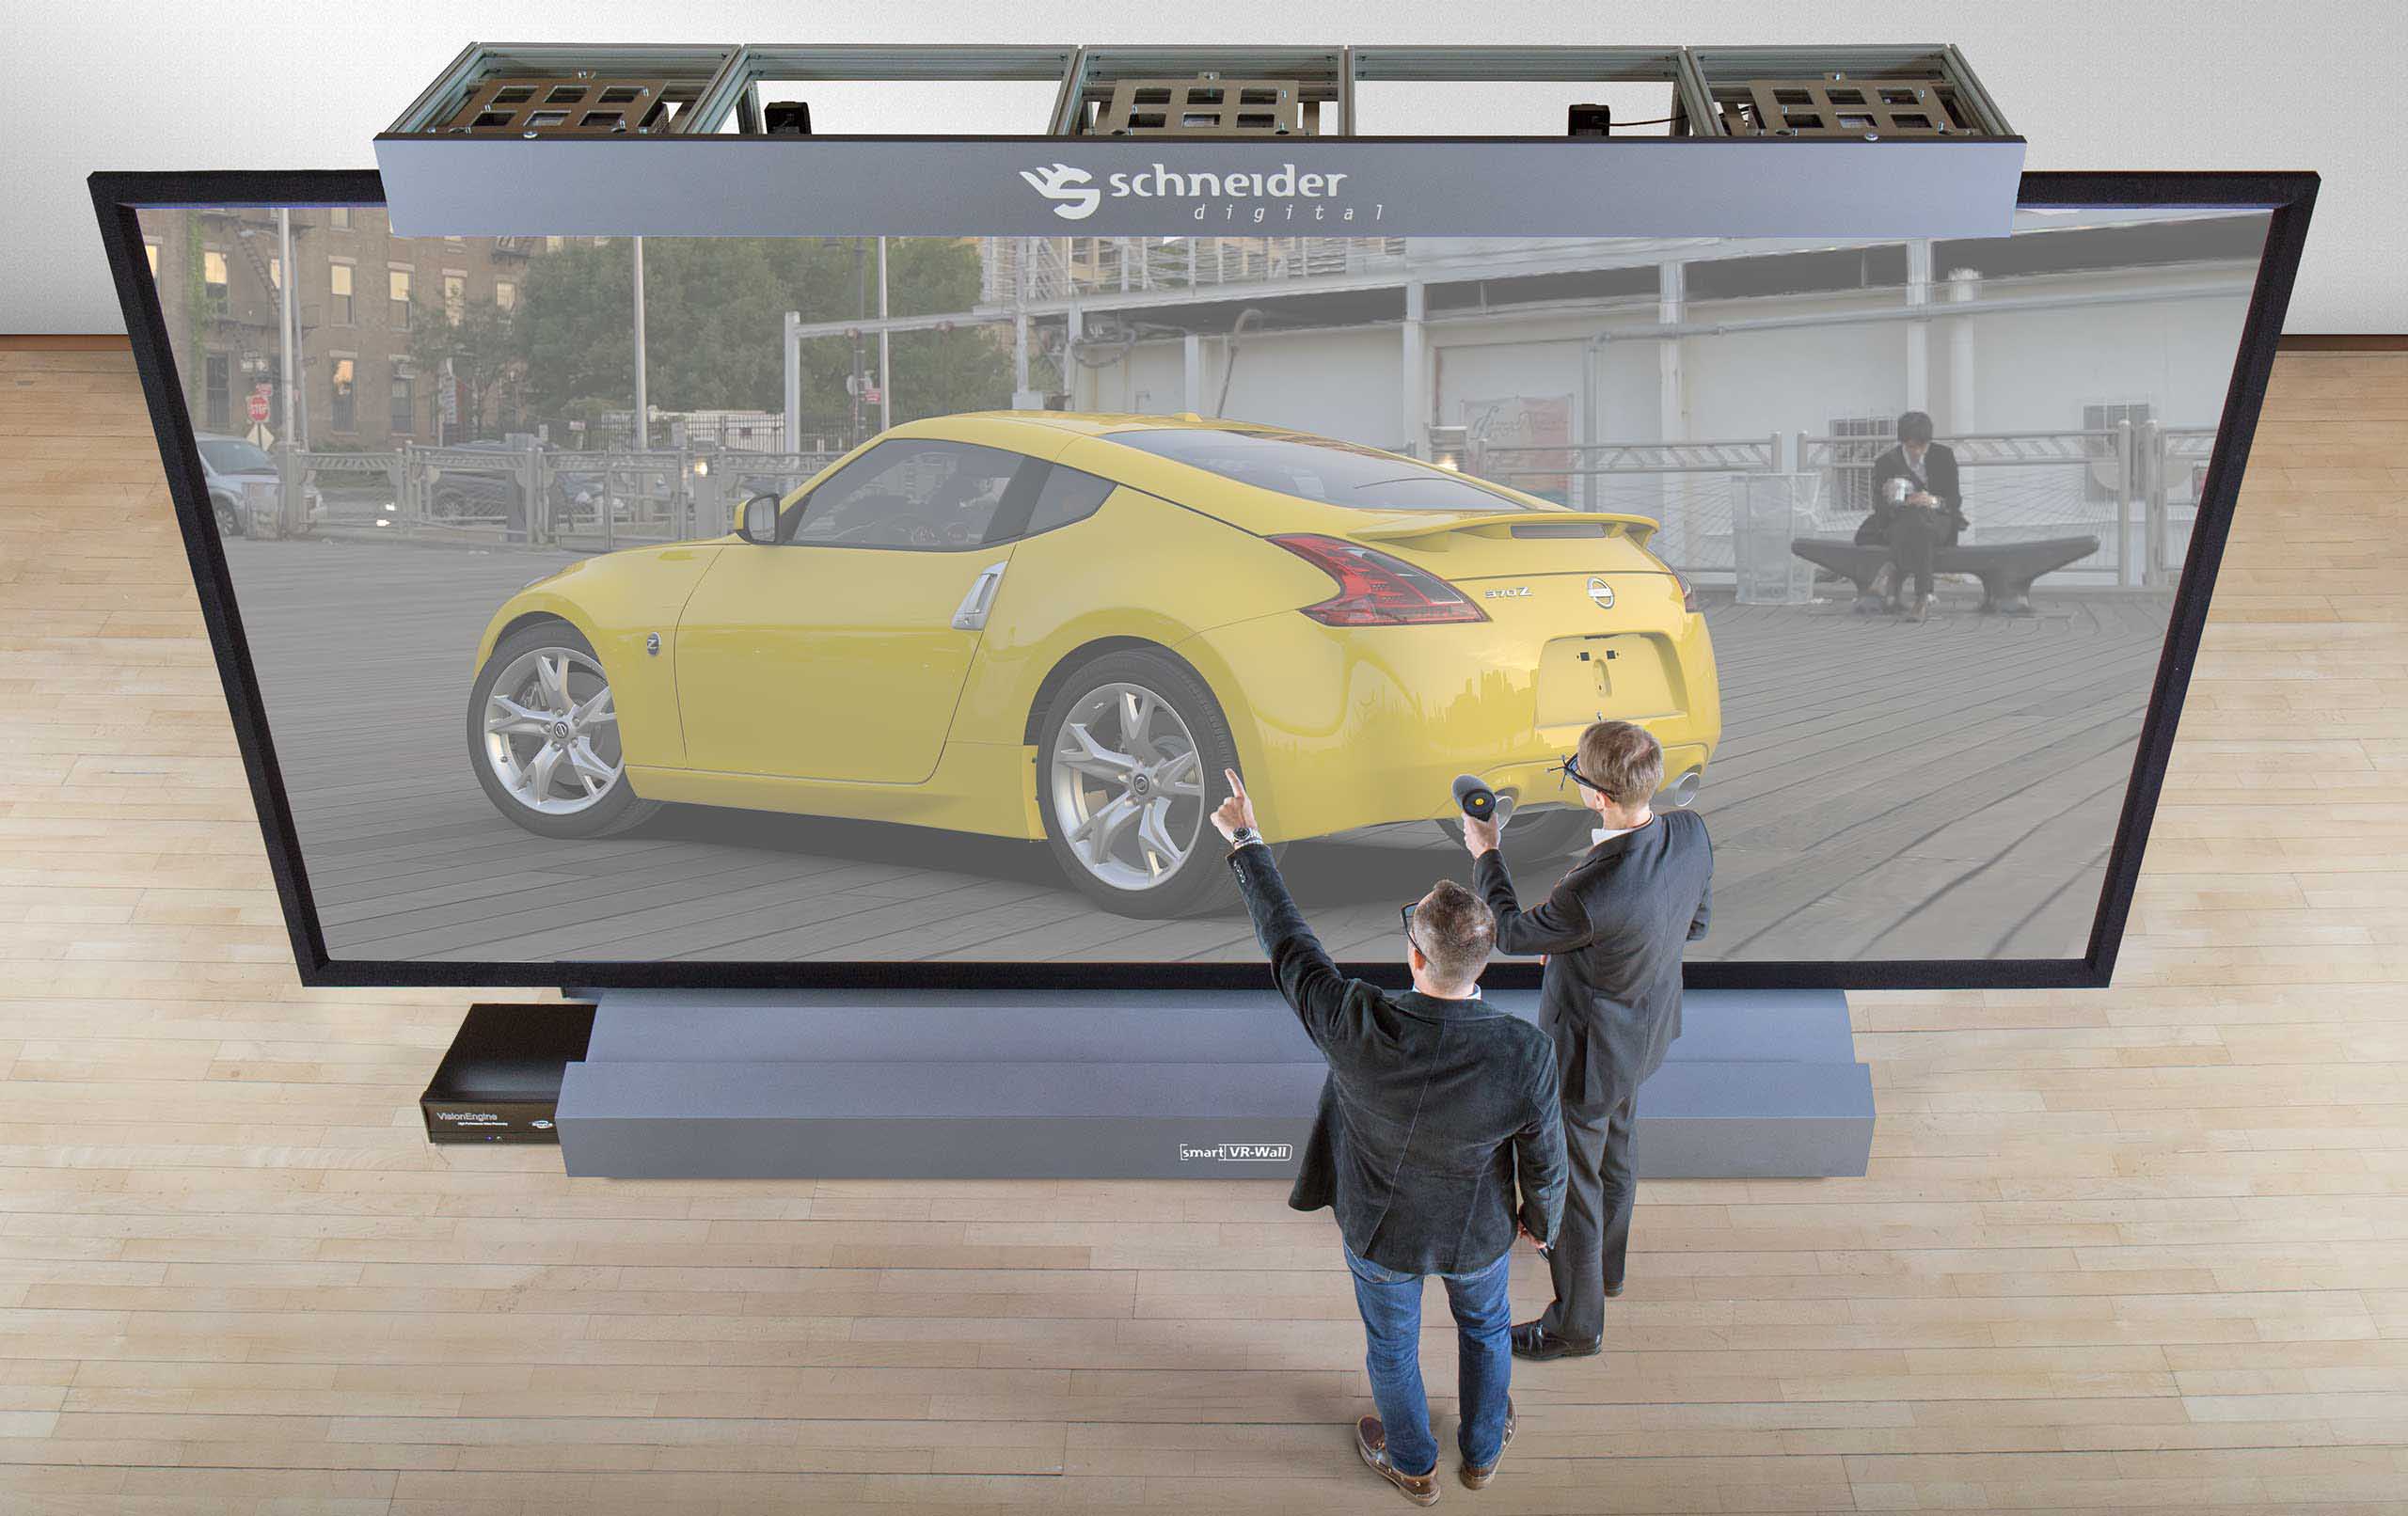 smart VR-Wall Automobil-Hersteller konfiguriert Fahrzeug in VR-Umgebung 